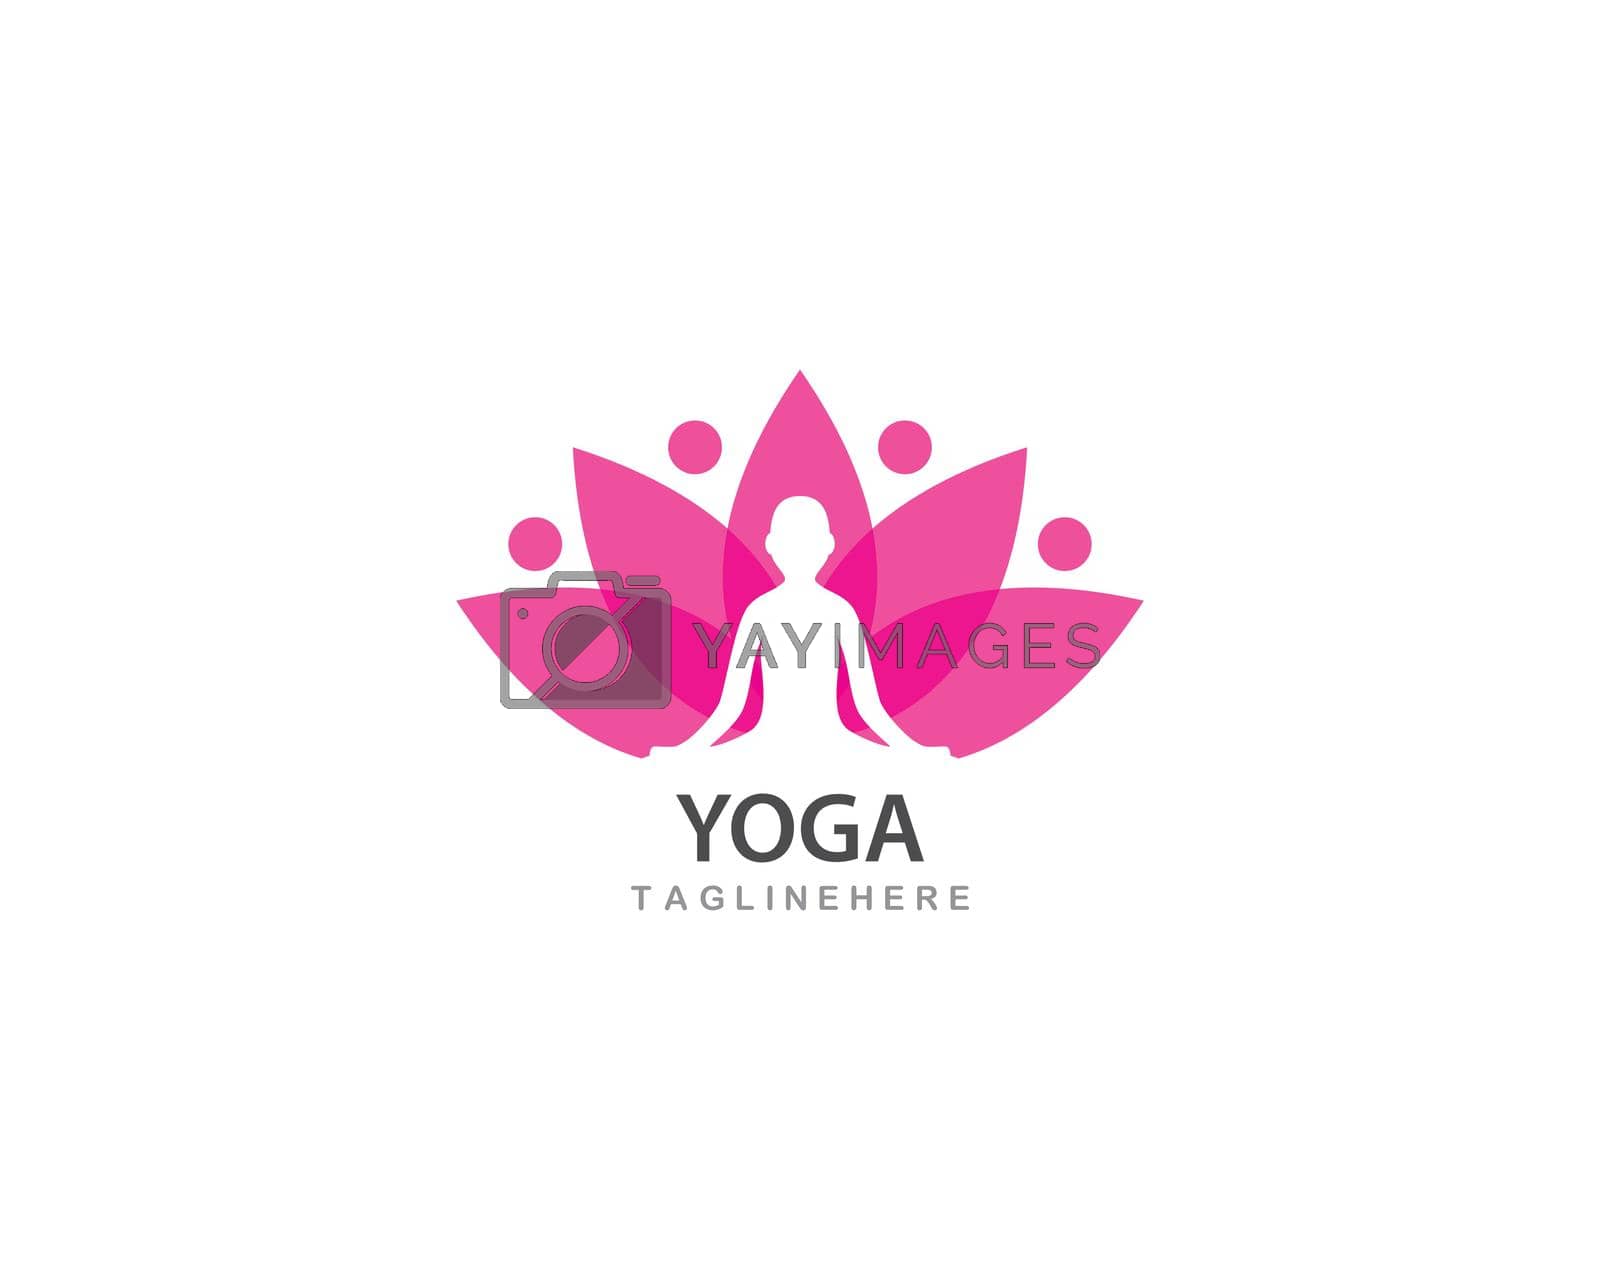 Meditation yoga logo template vector